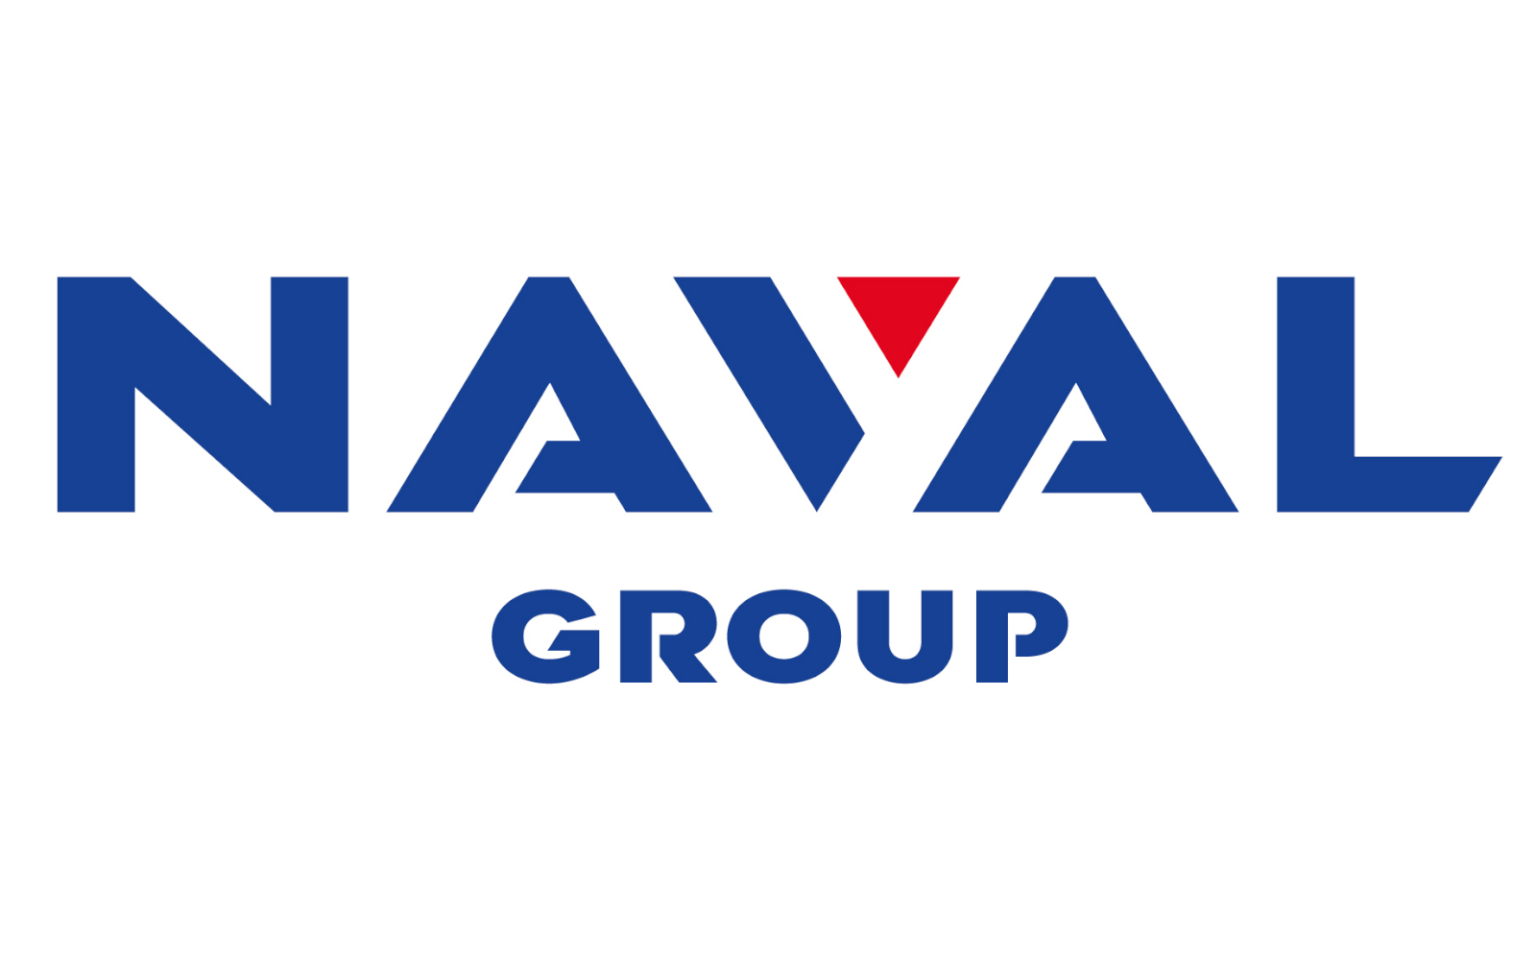 Logo-Naval-Group